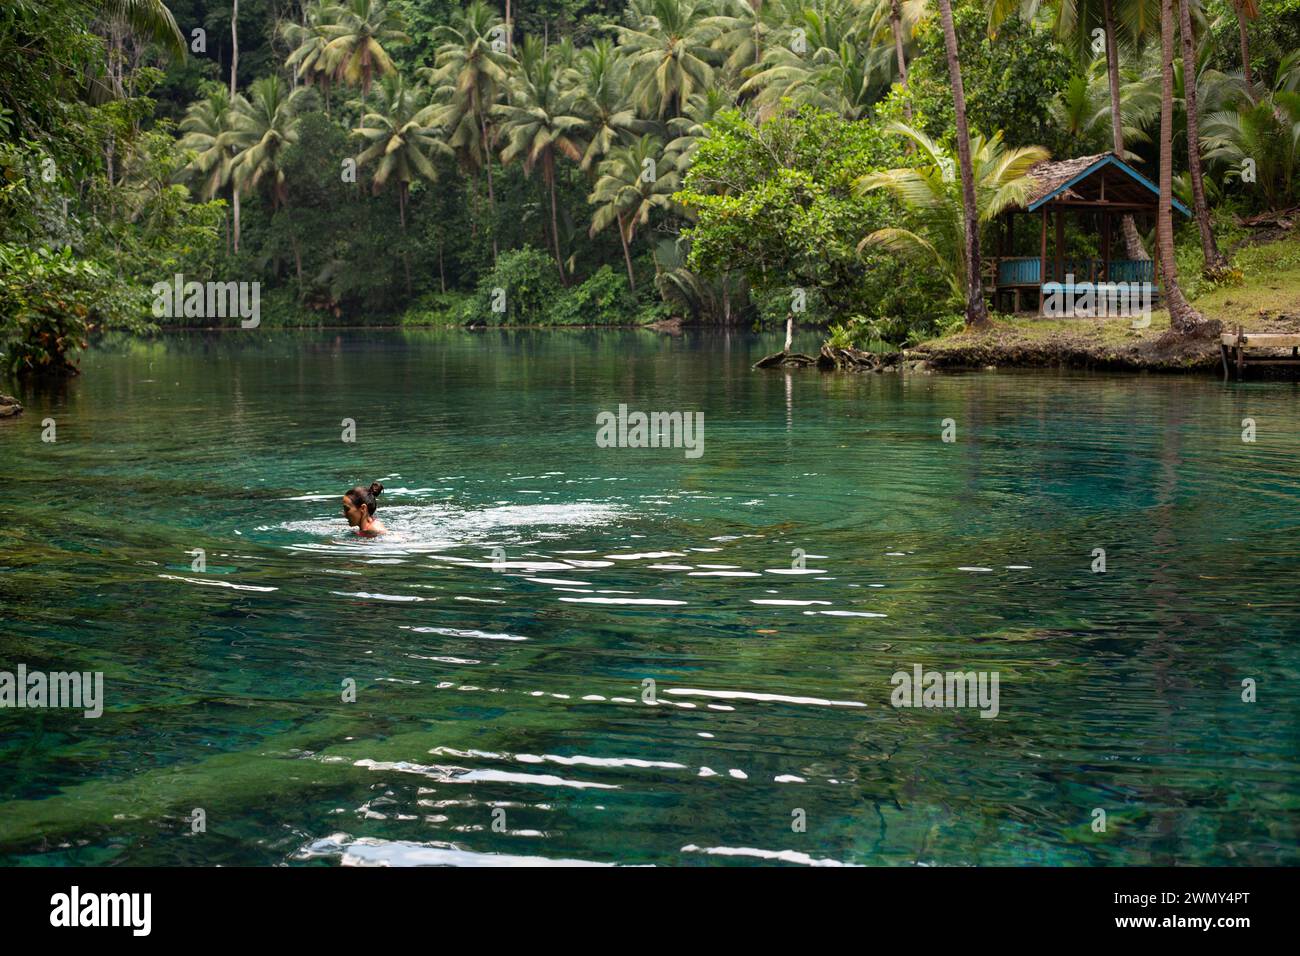 Una donna turistica che nuota al lago Paisu Pok a Luk Panenteng, Banggai, Sulawesi, Indonesia. Foto Stock